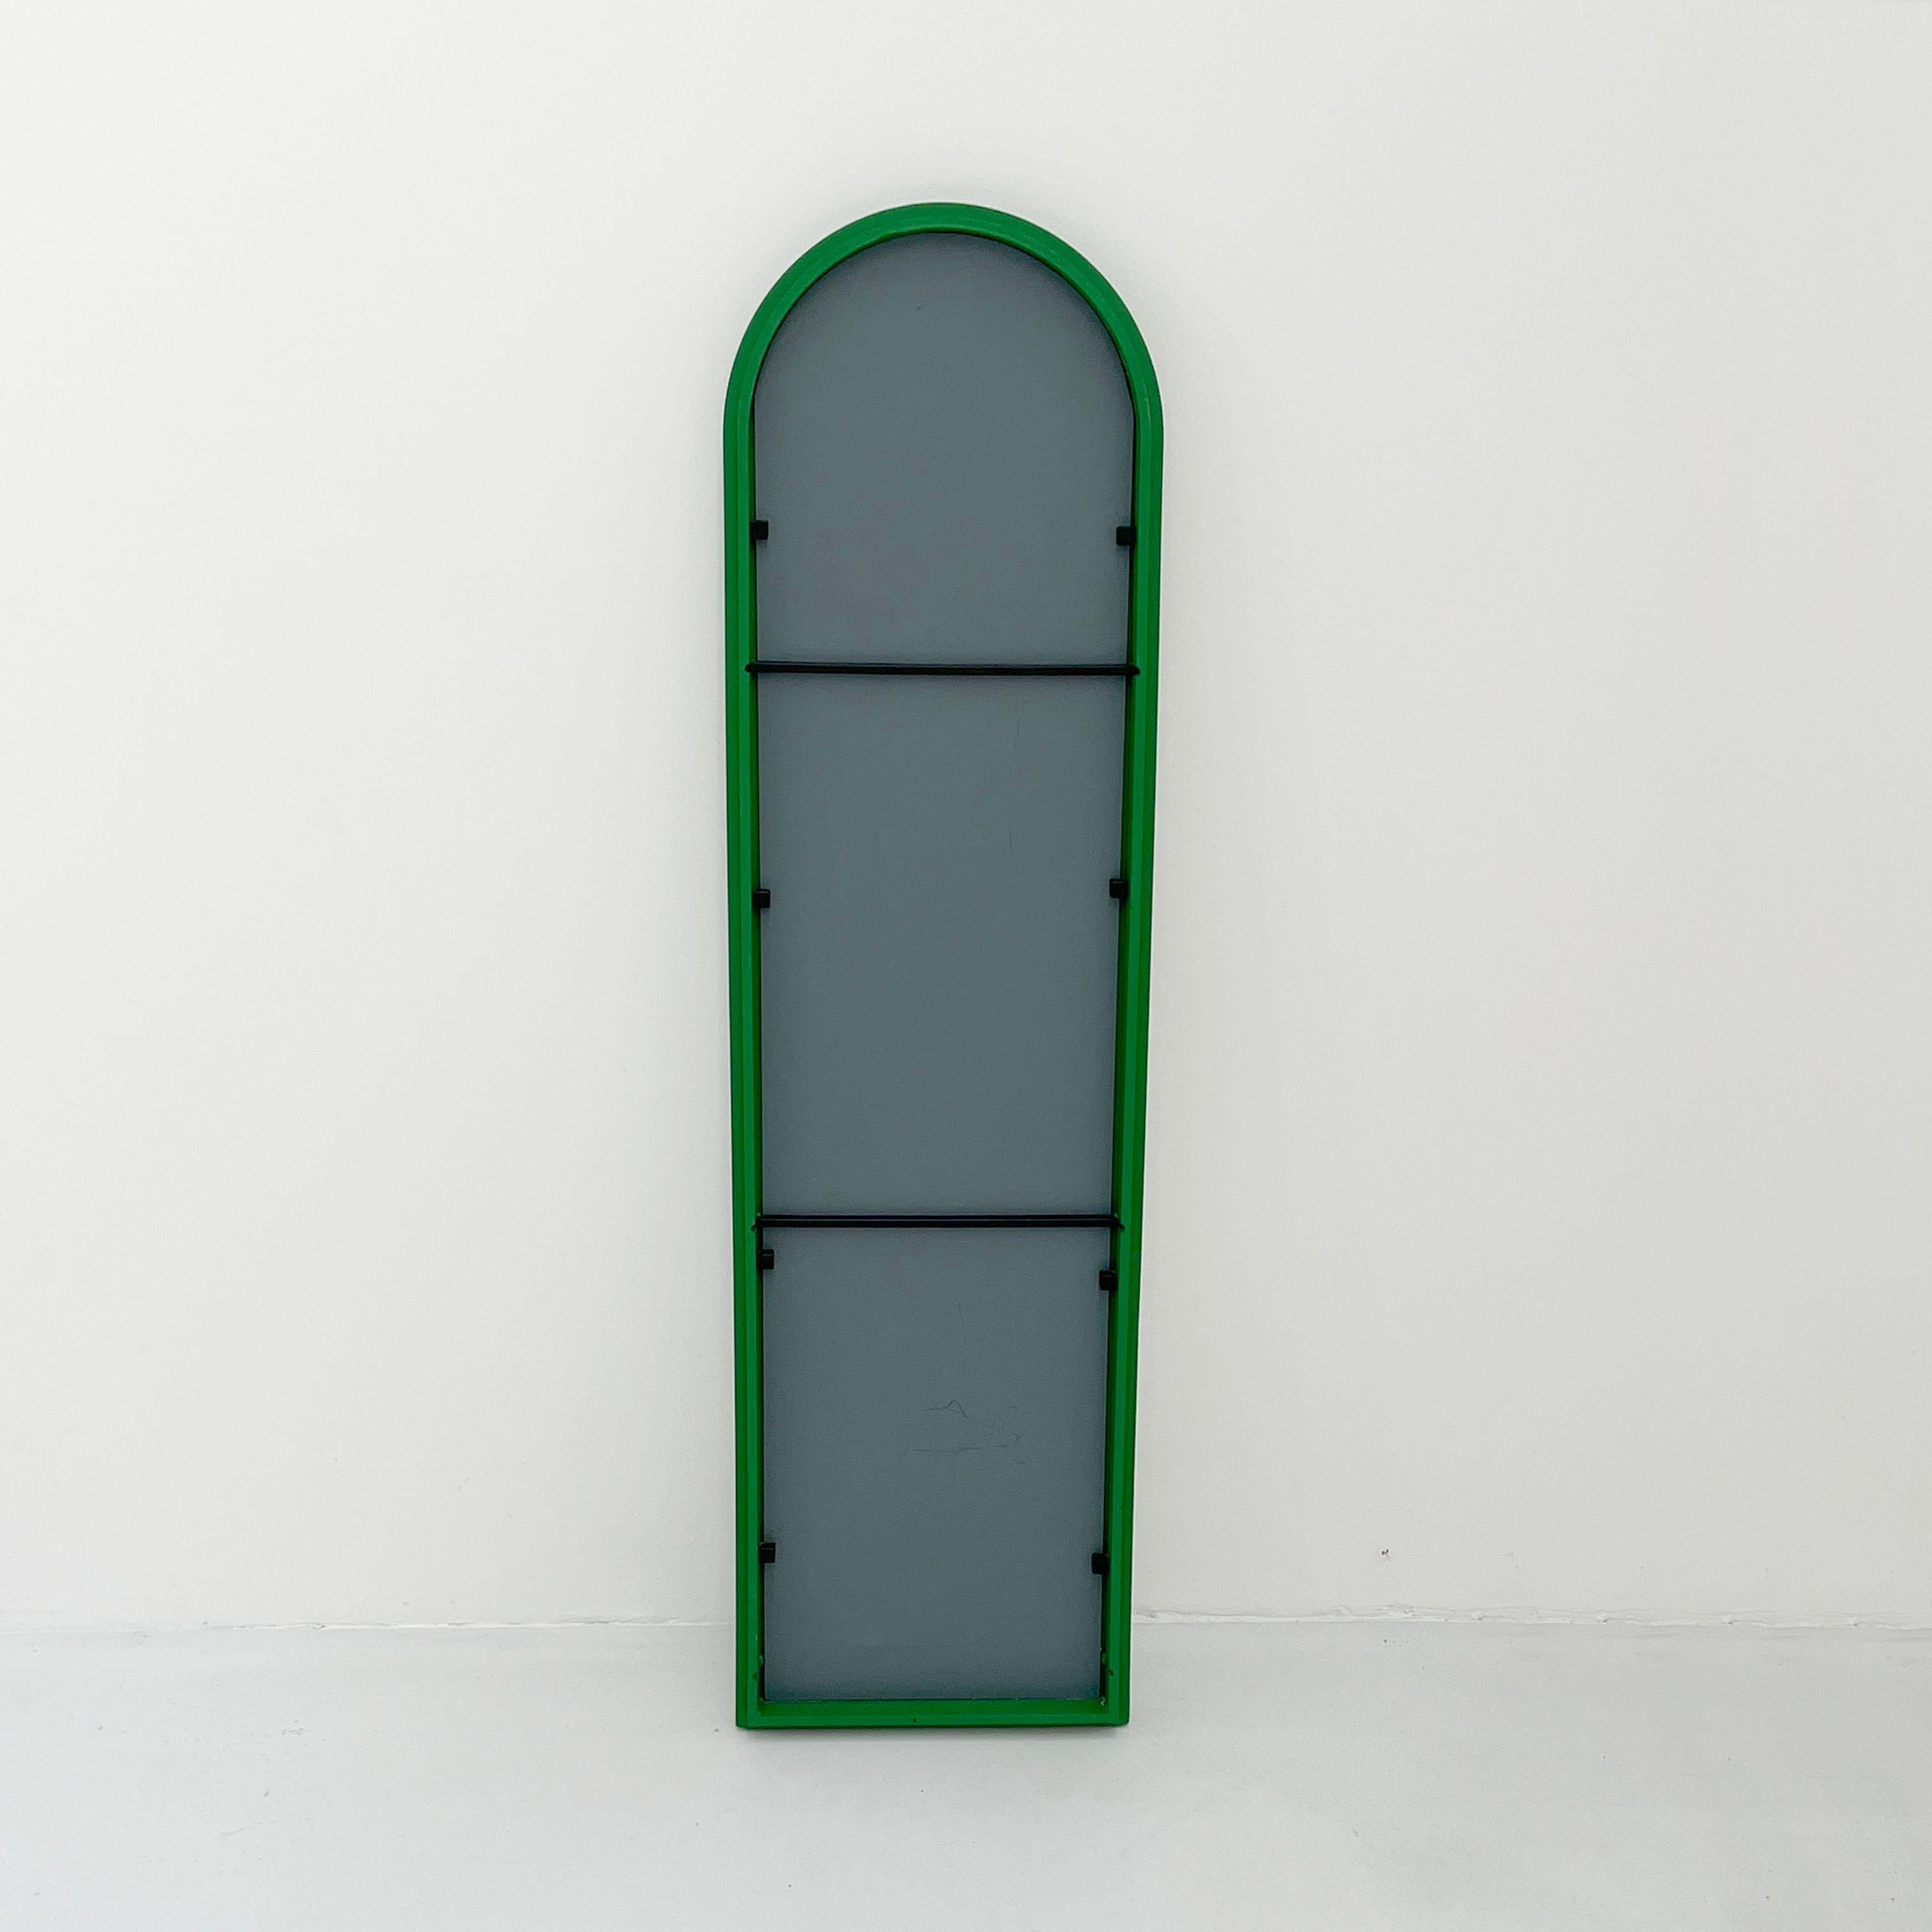 Late 20th Century Green Frame Mirror by Anna Castelli Ferrieri for Kartell, 1980s